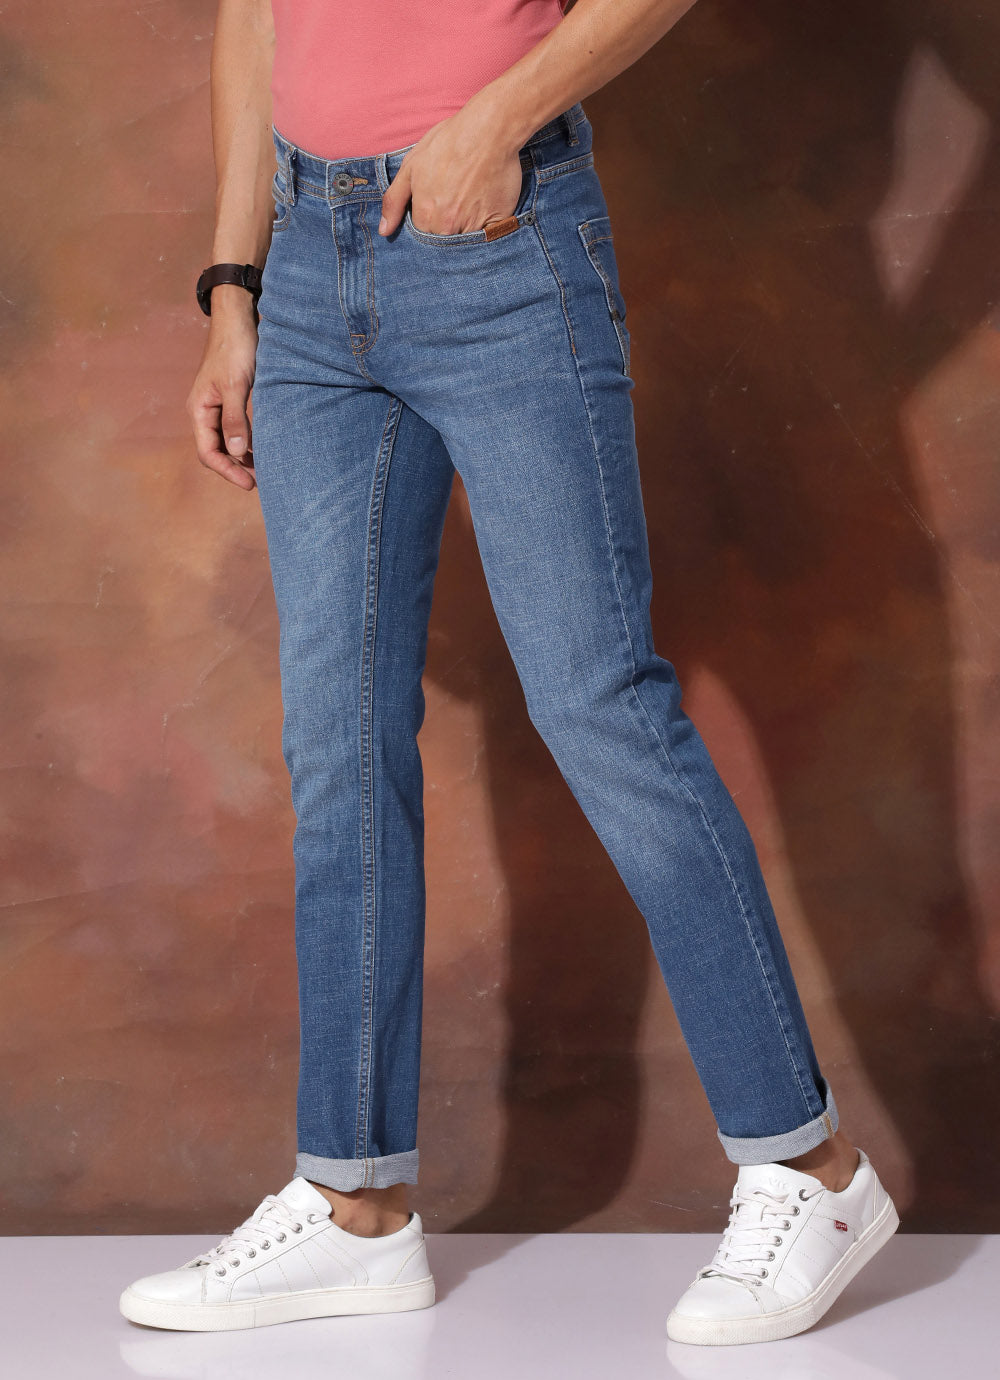 Light Blue Jeans with Regular Pockets made of Twill Denim